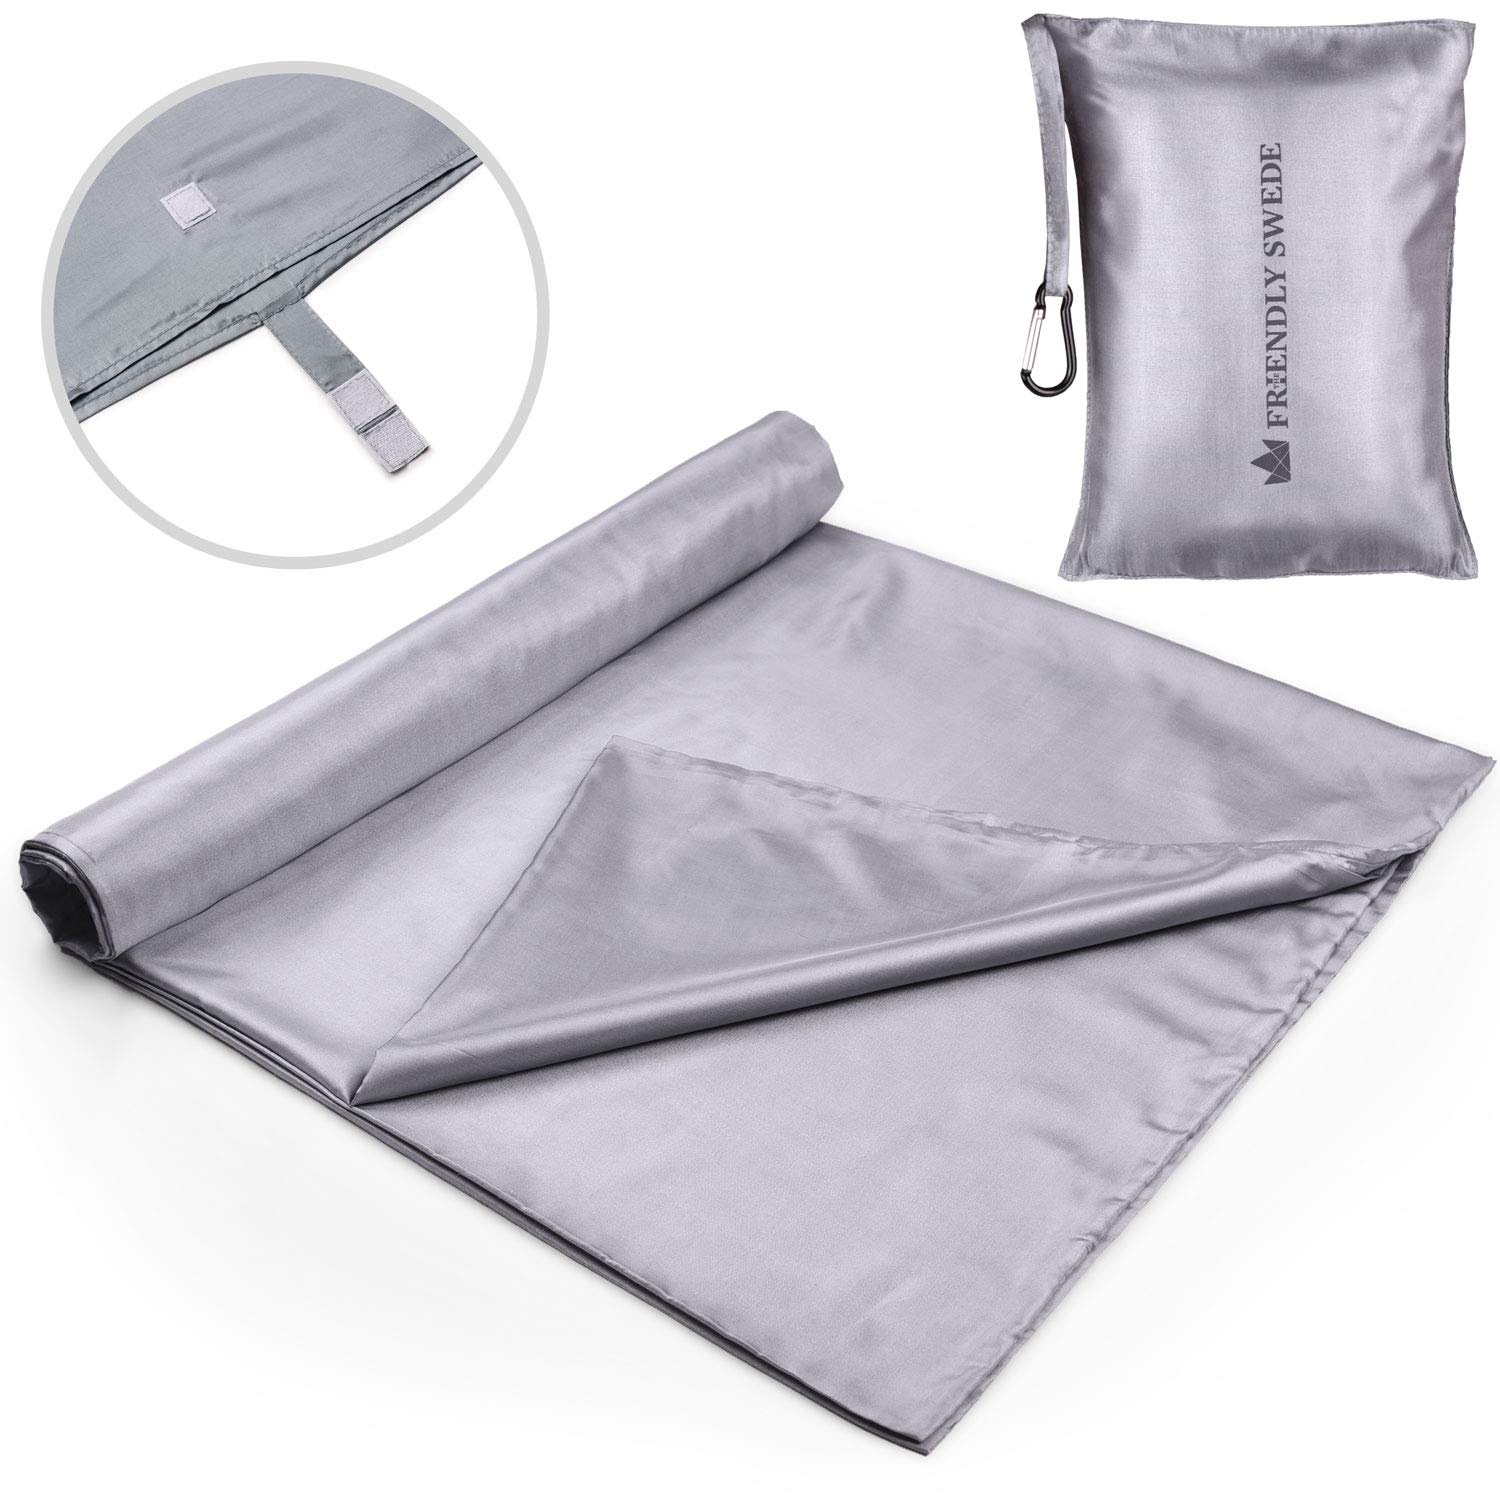 Lightweight 100% contton traveling and camping sheet hotel sleeping bag liner Envelop sleeping bag TEPSMIGO Sleeping bag liner Sleeping bags